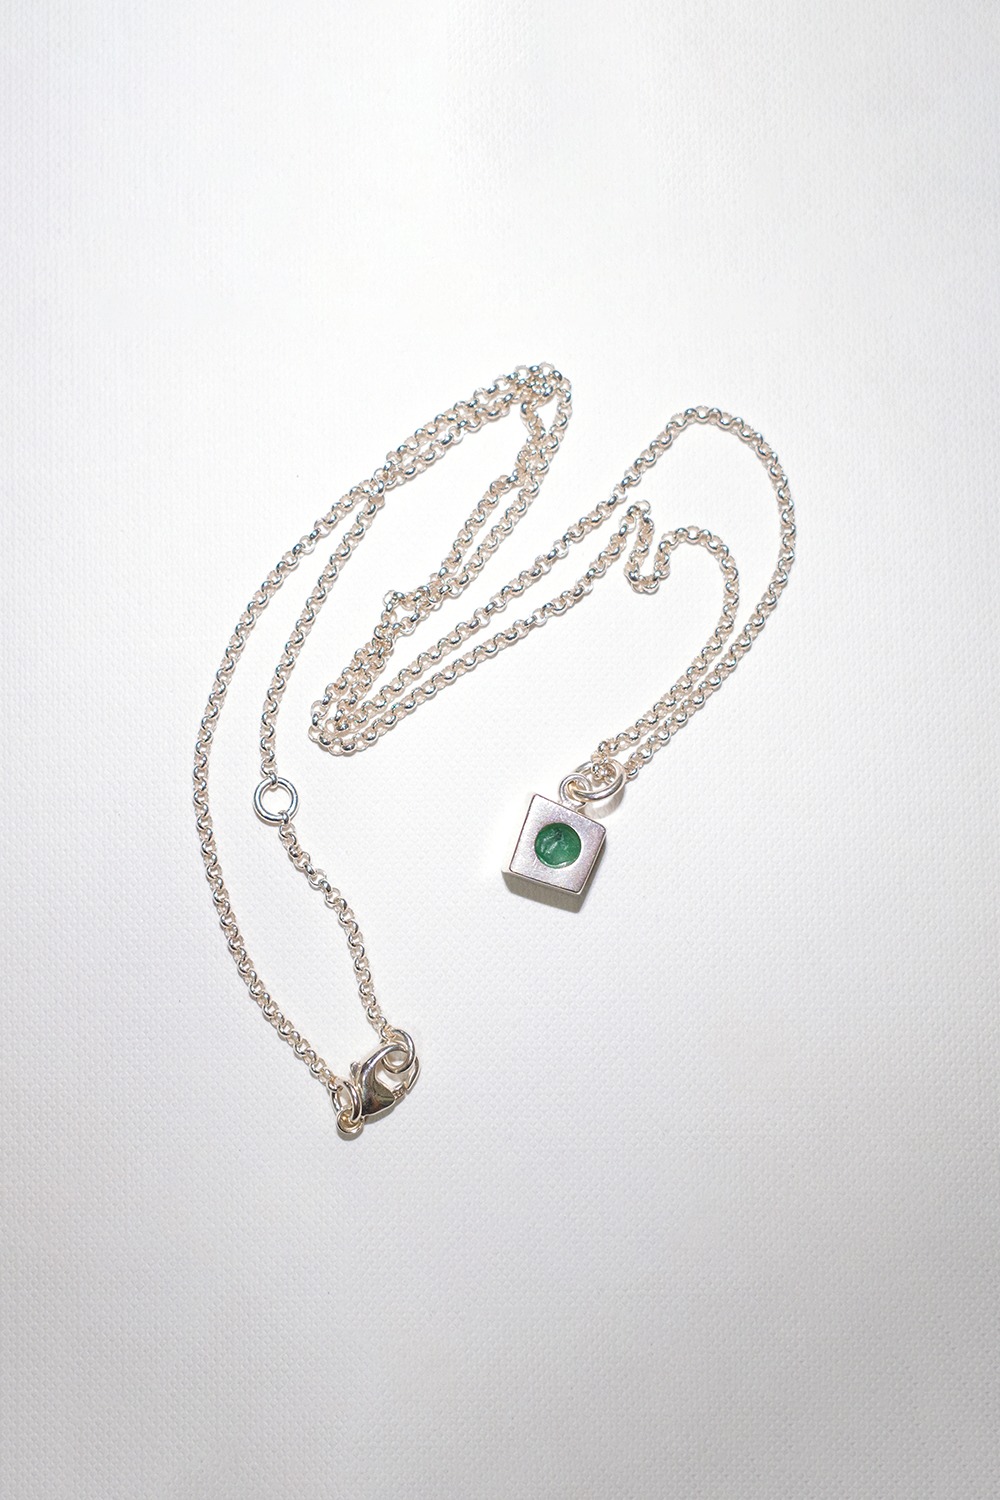 HOTDRYGREY_Emerald charm necklace